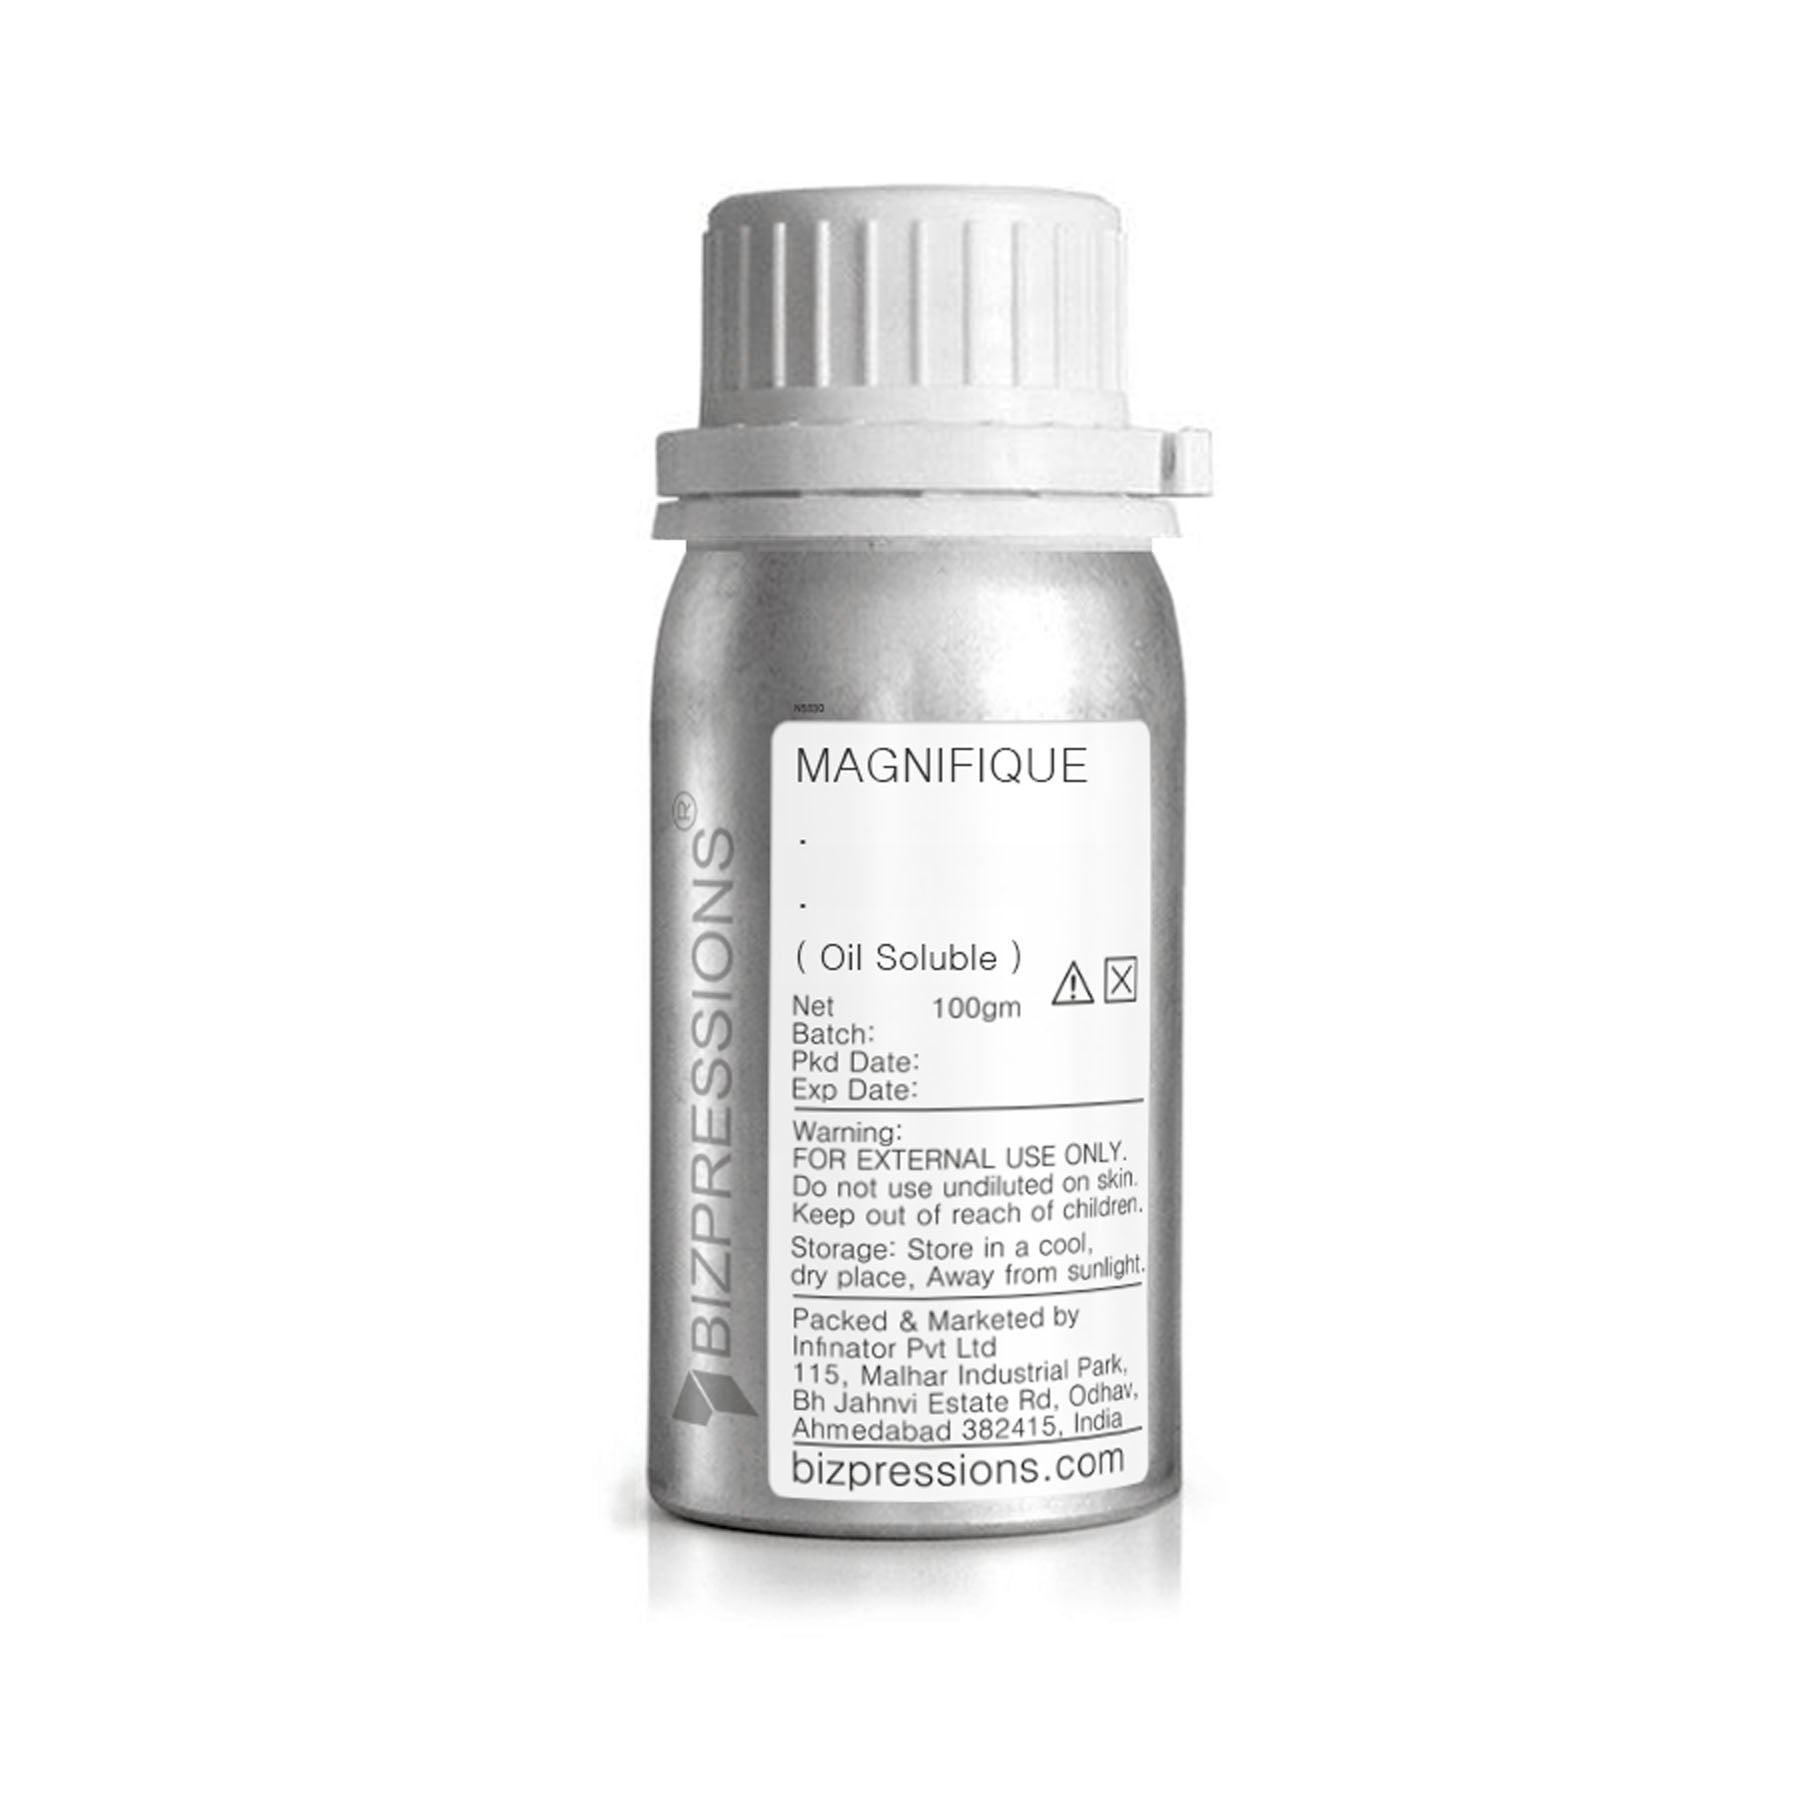 MAGNIFIQUE - Fragrance ( Oil Soluble ) - 1 kg